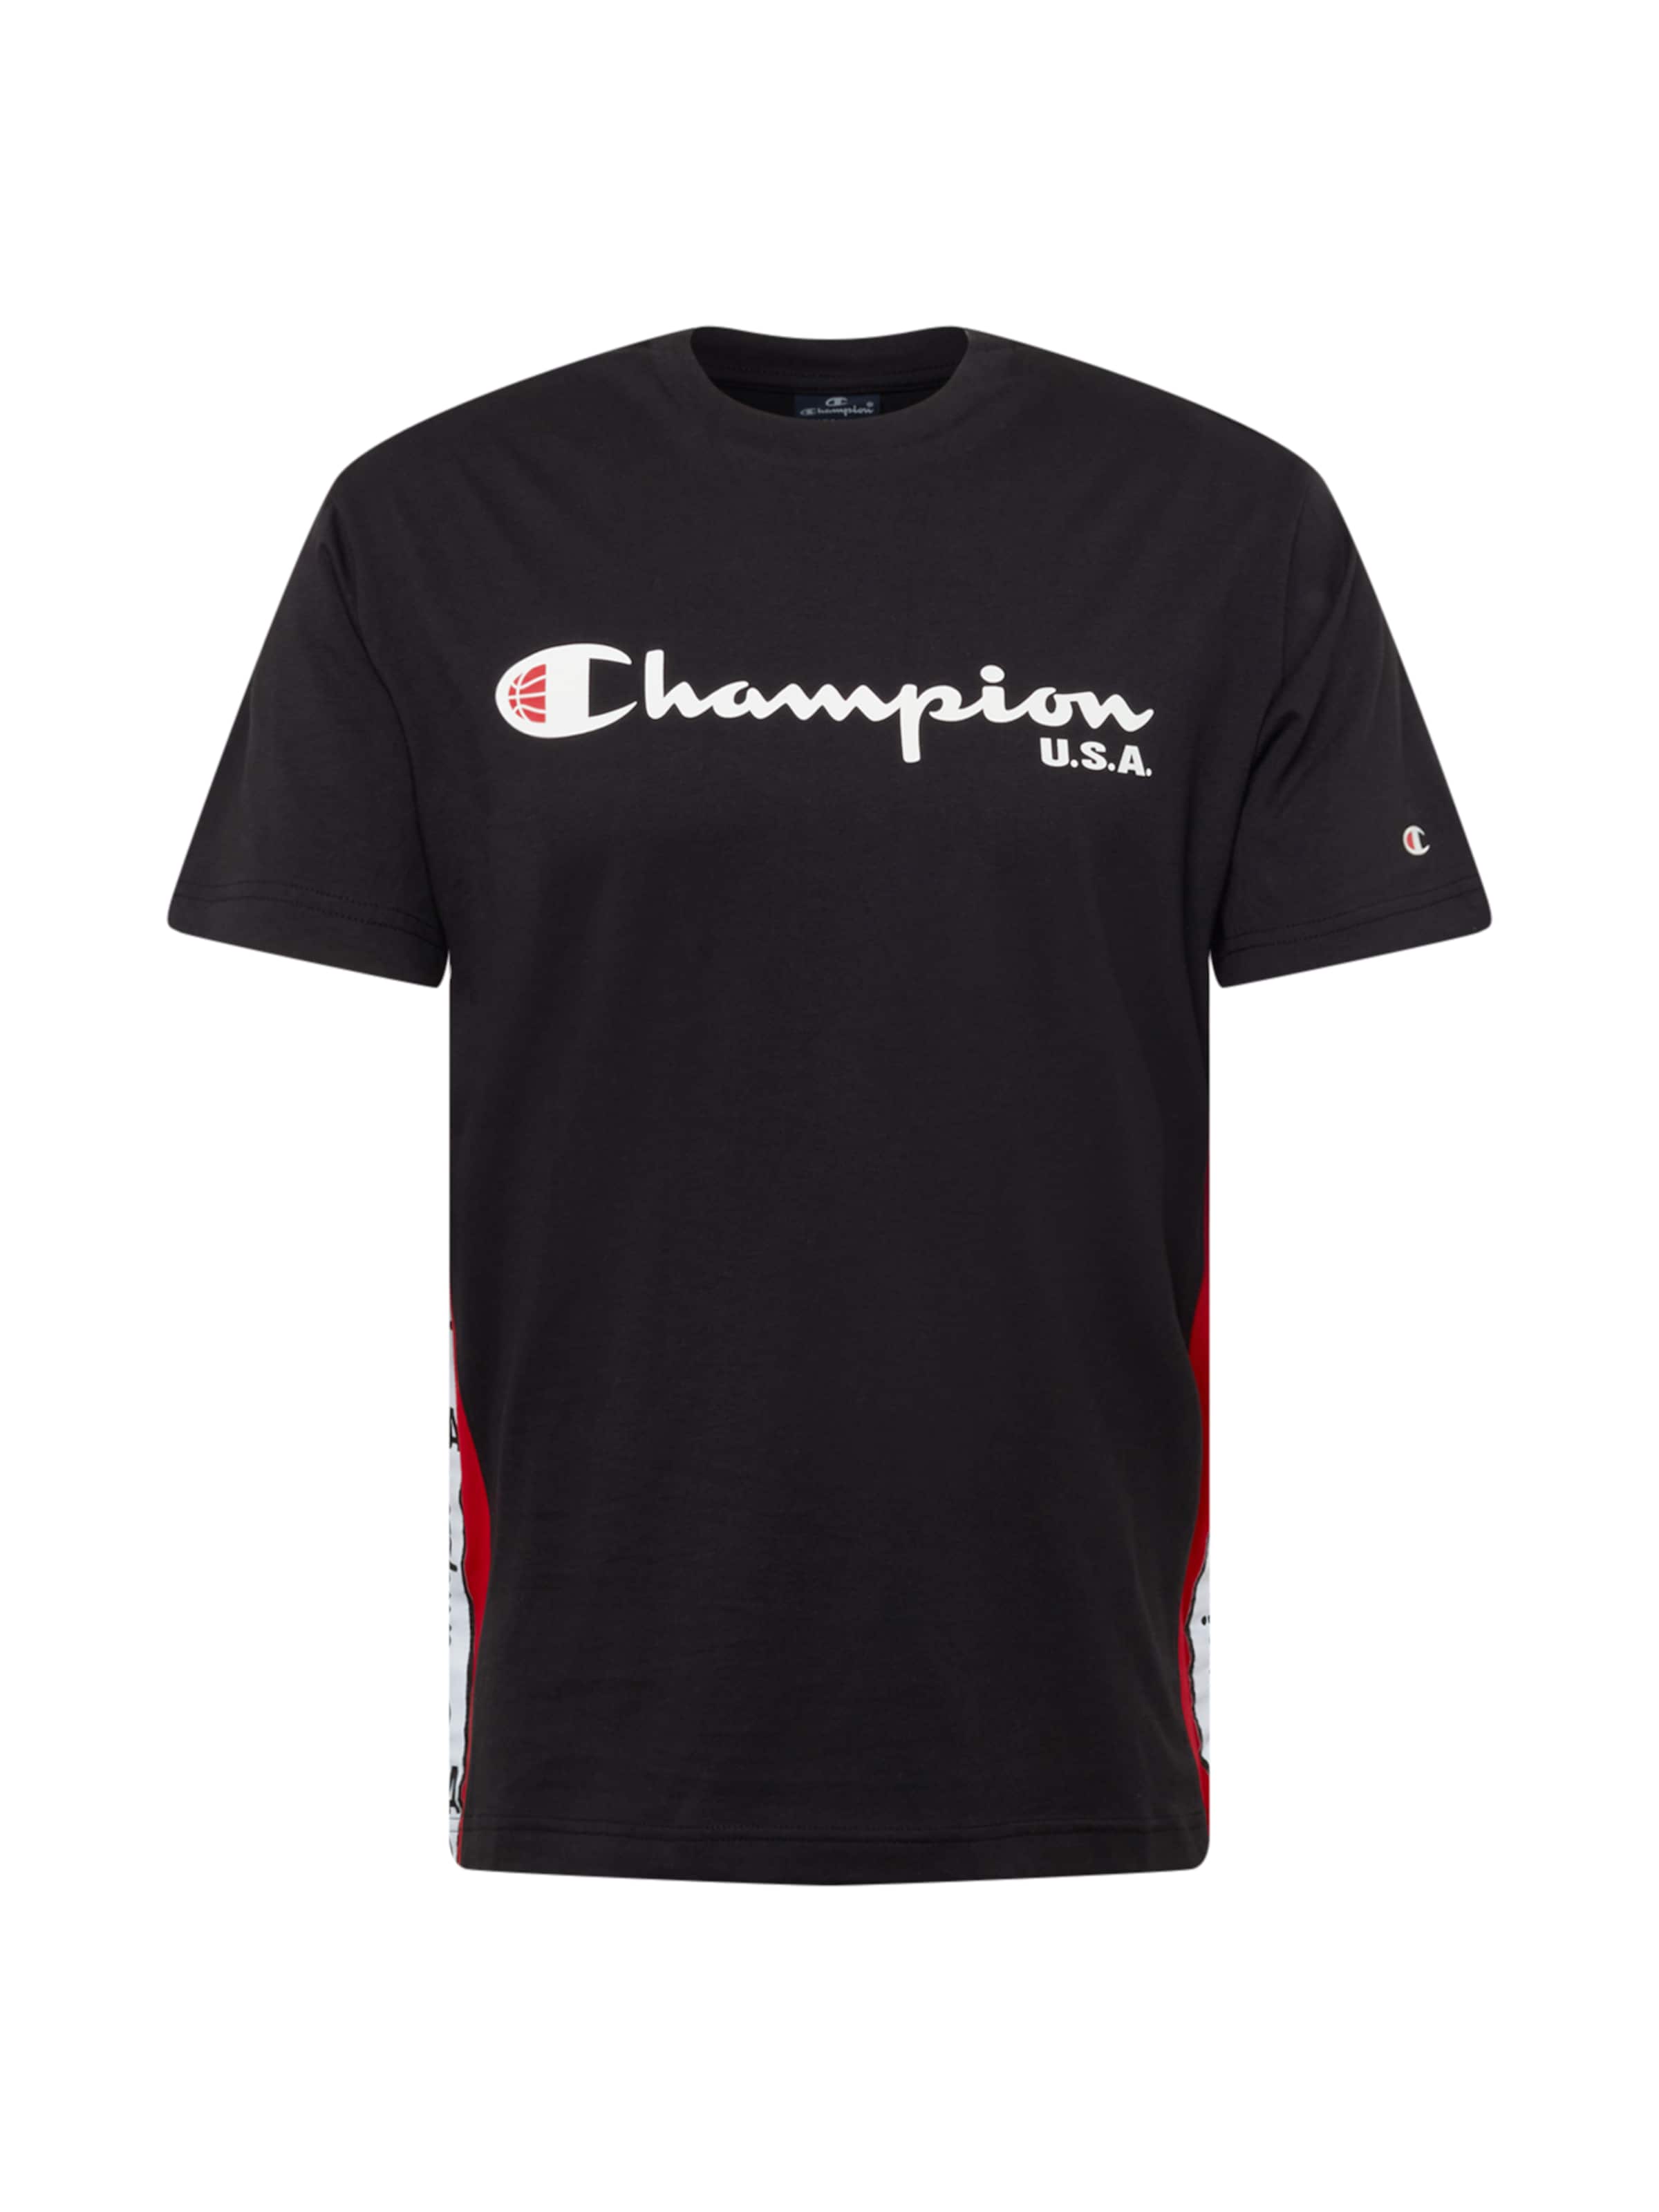 Männer Shirts Champion Authentic Athletic Apparel T-Shirt in Schwarz - RQ35694